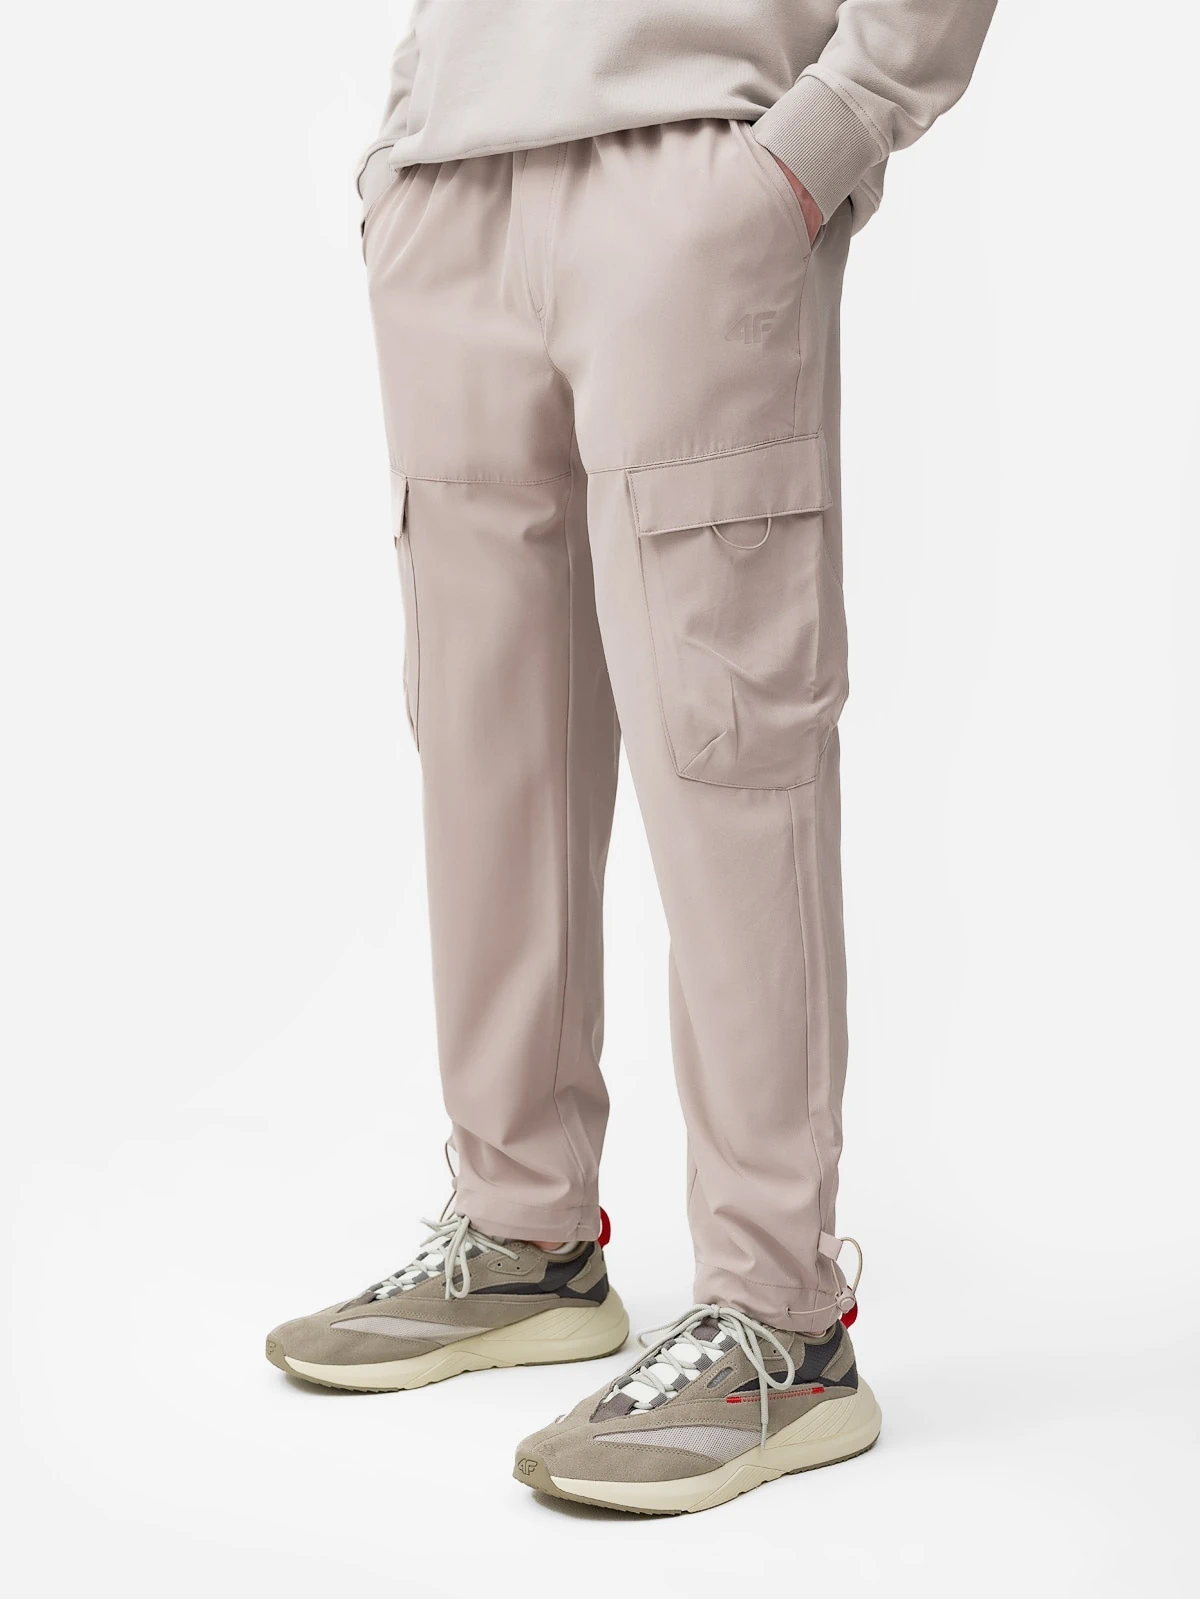 KAZO Cargos : Buy KAZO Slim Fit Cargo Pants Beige Online | Nykaa Fashion